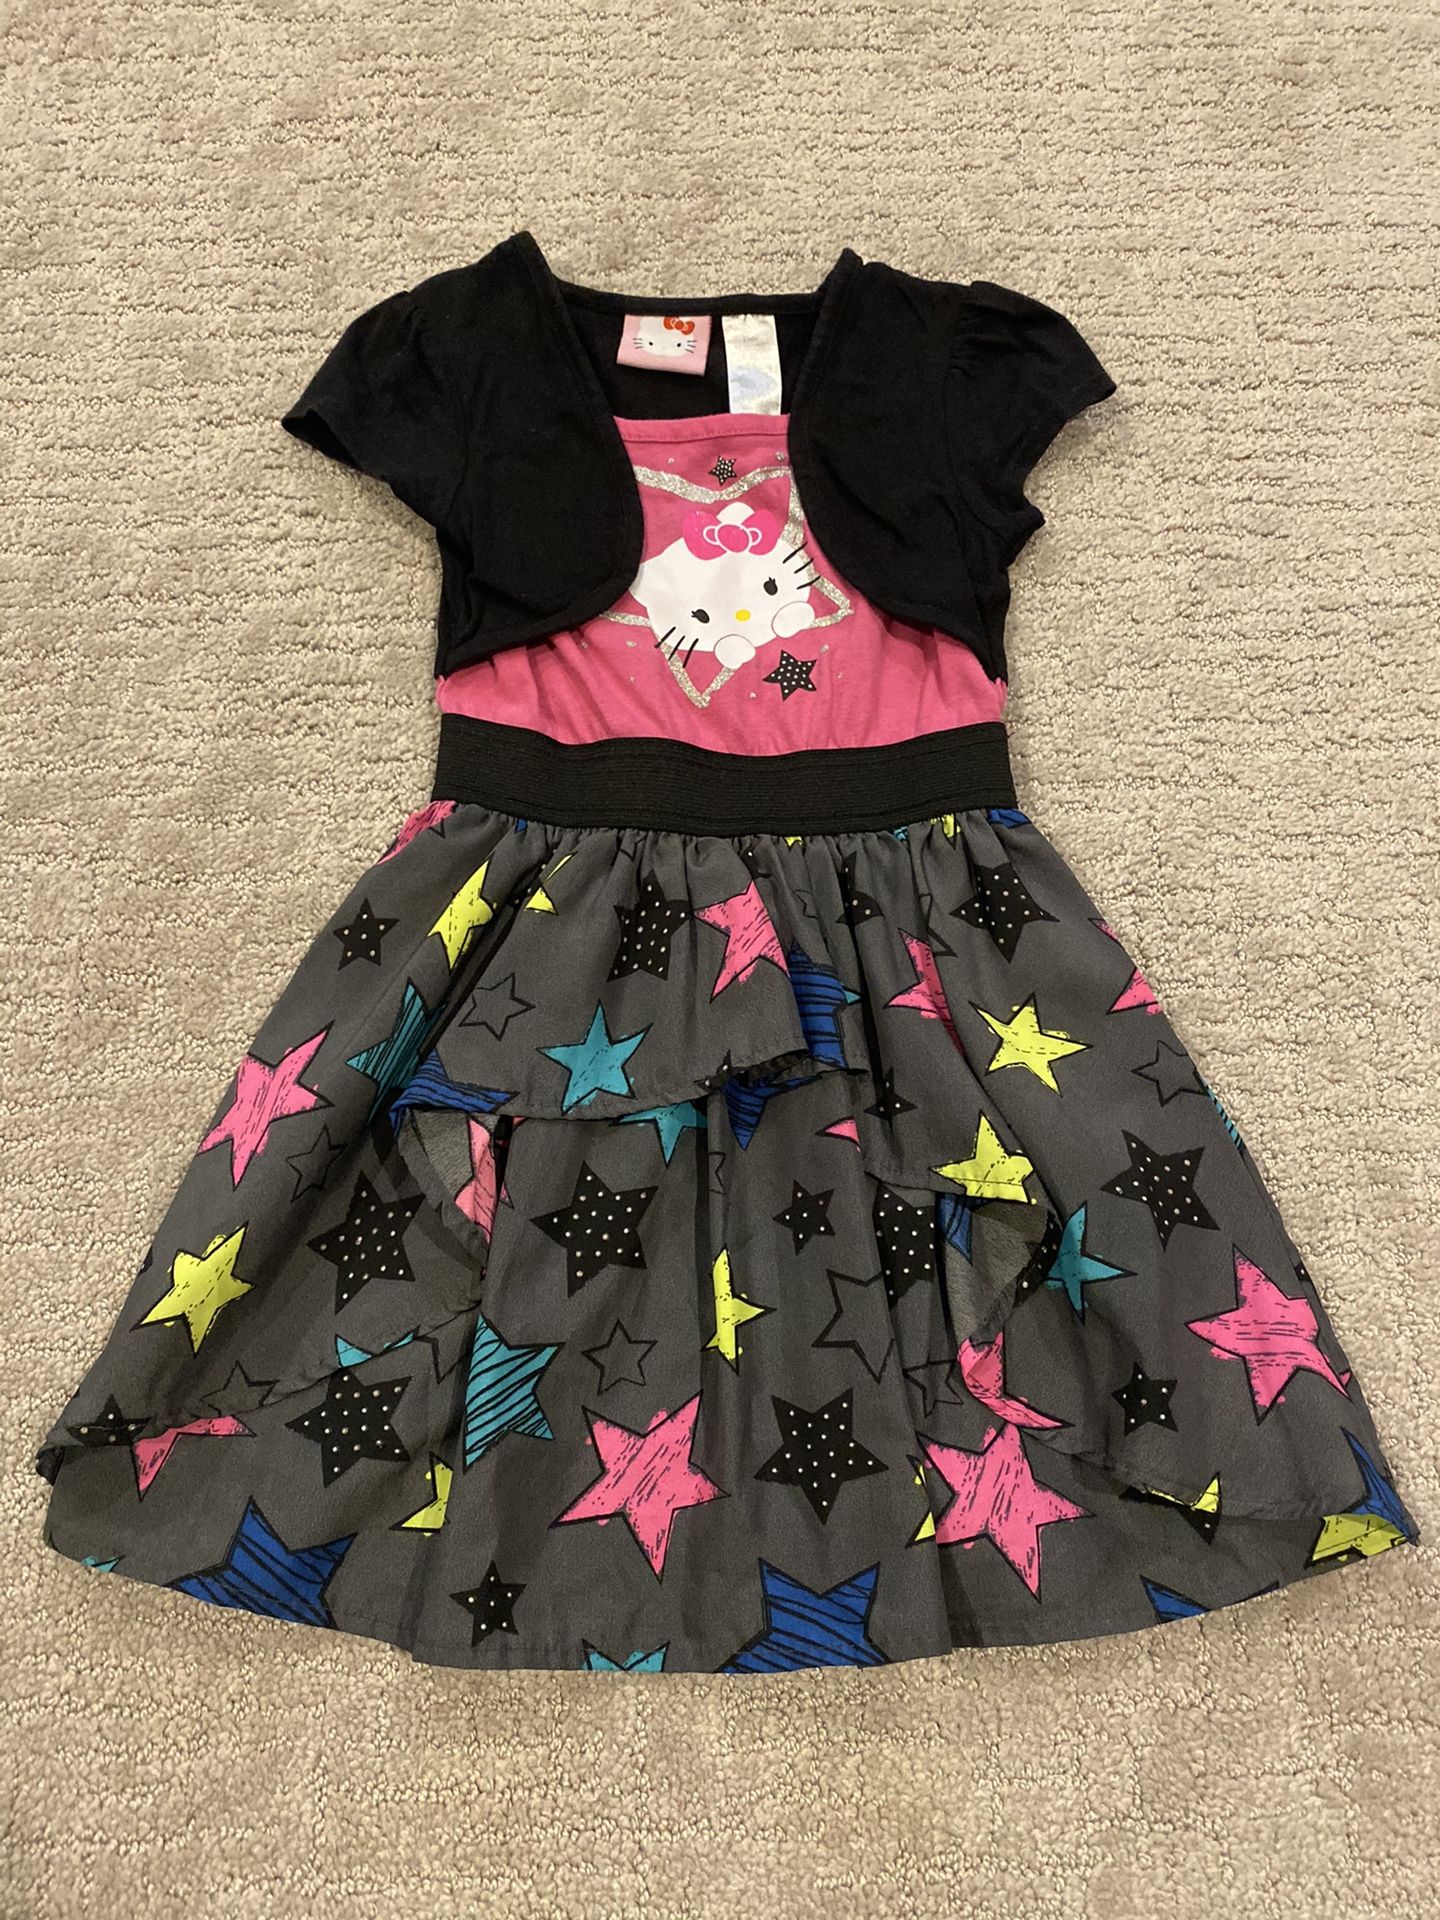 Cute Hello Kitty dress for girls